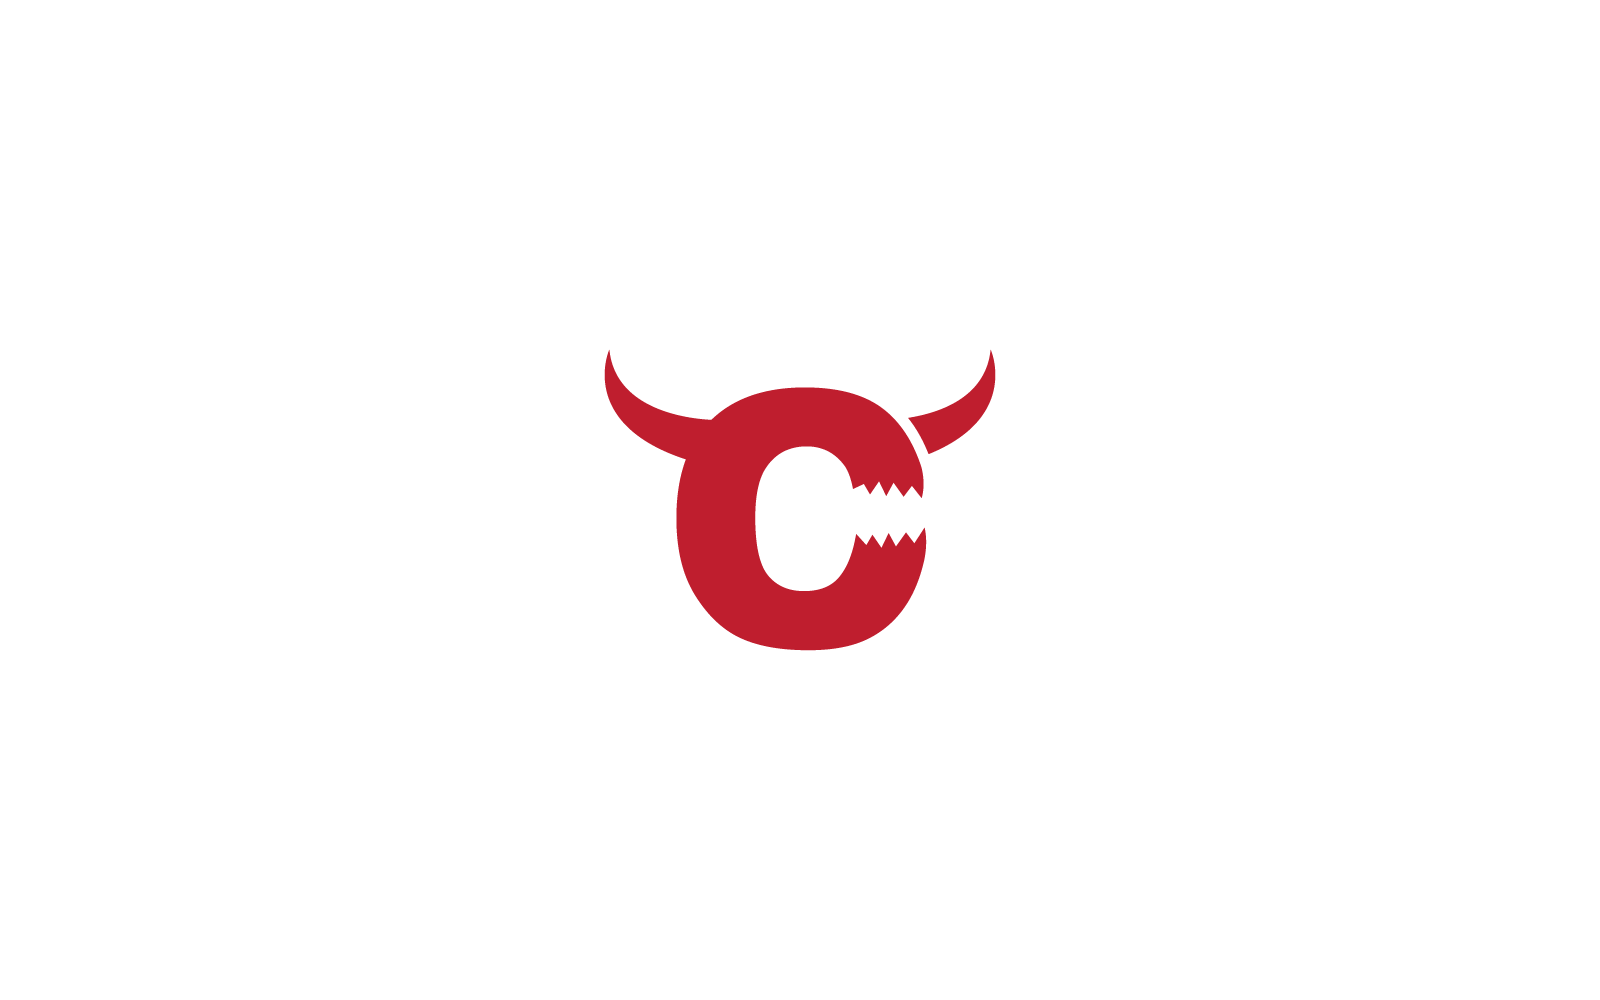 C initial letter with devil horn logo vector design